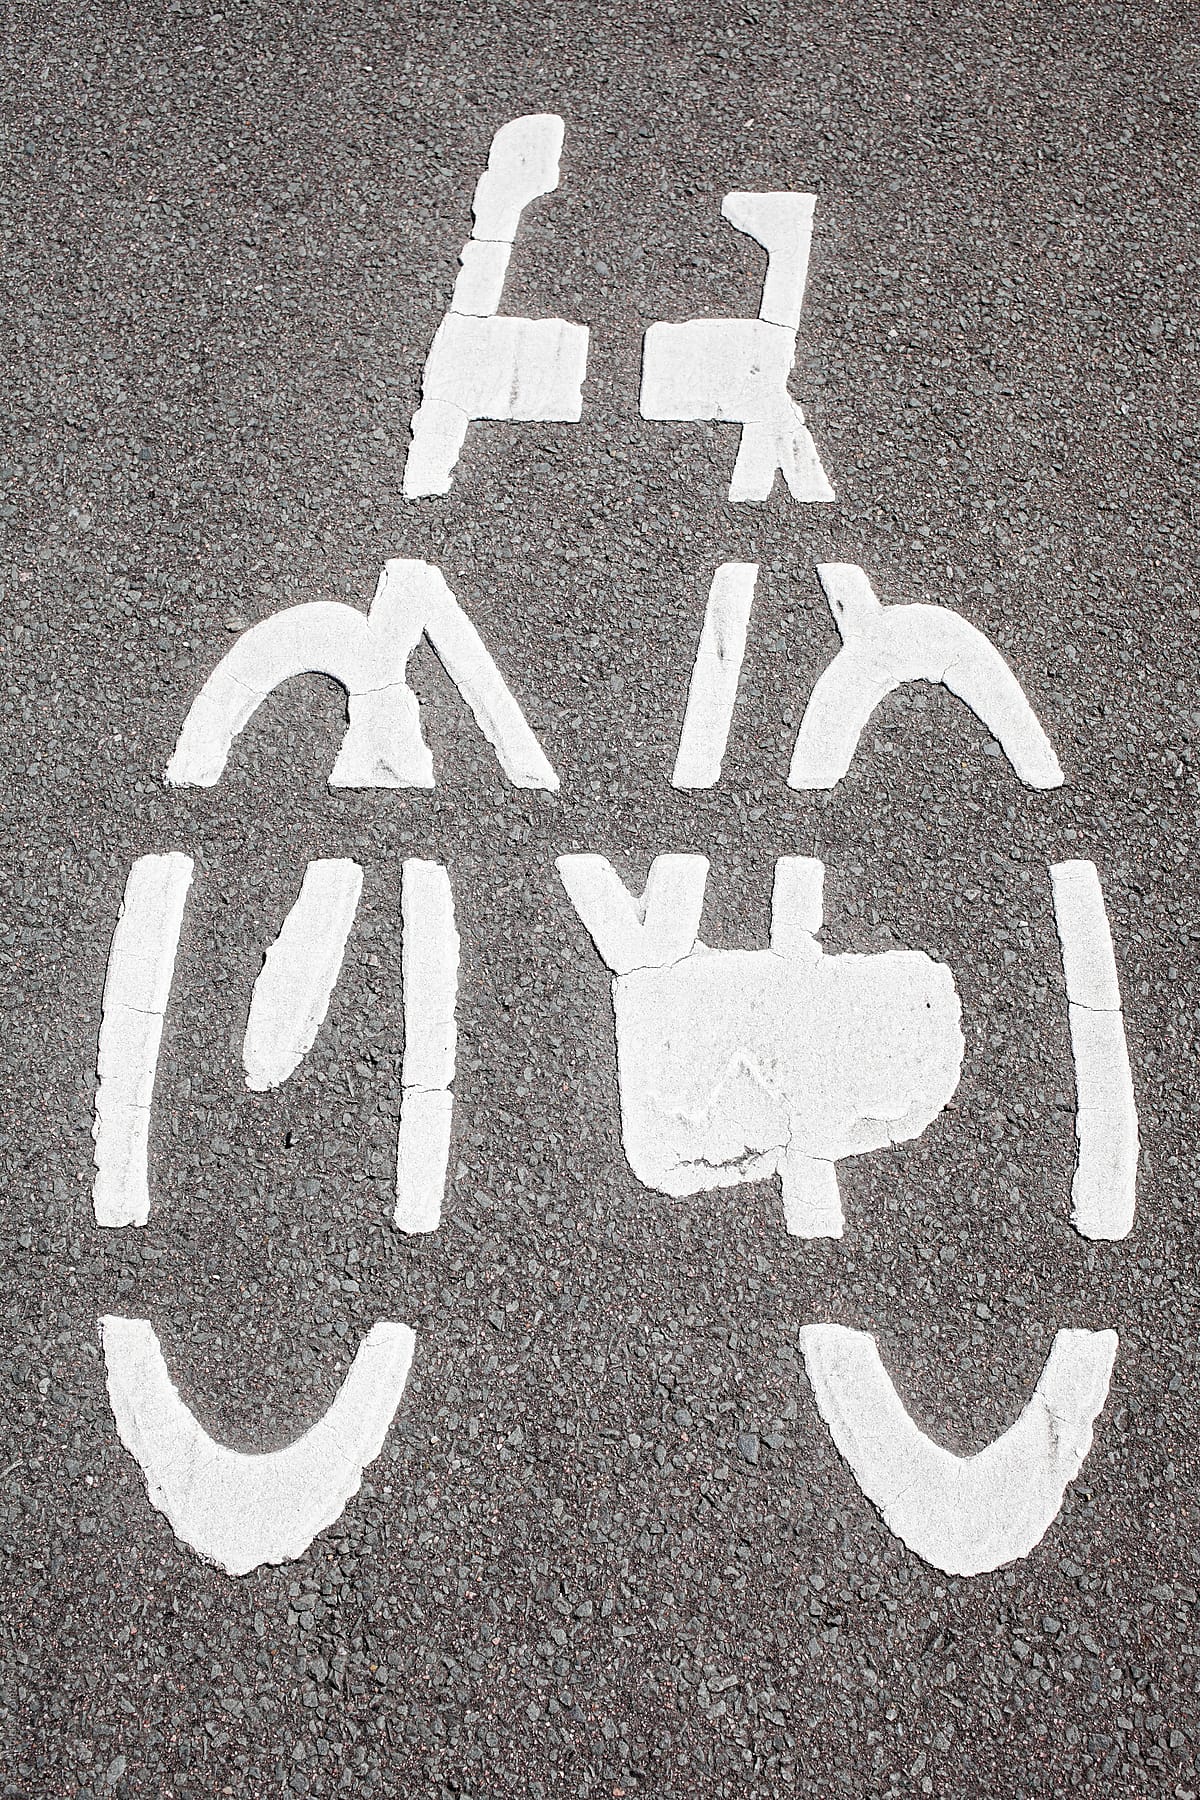 Bicycle lane sign on the asphalt